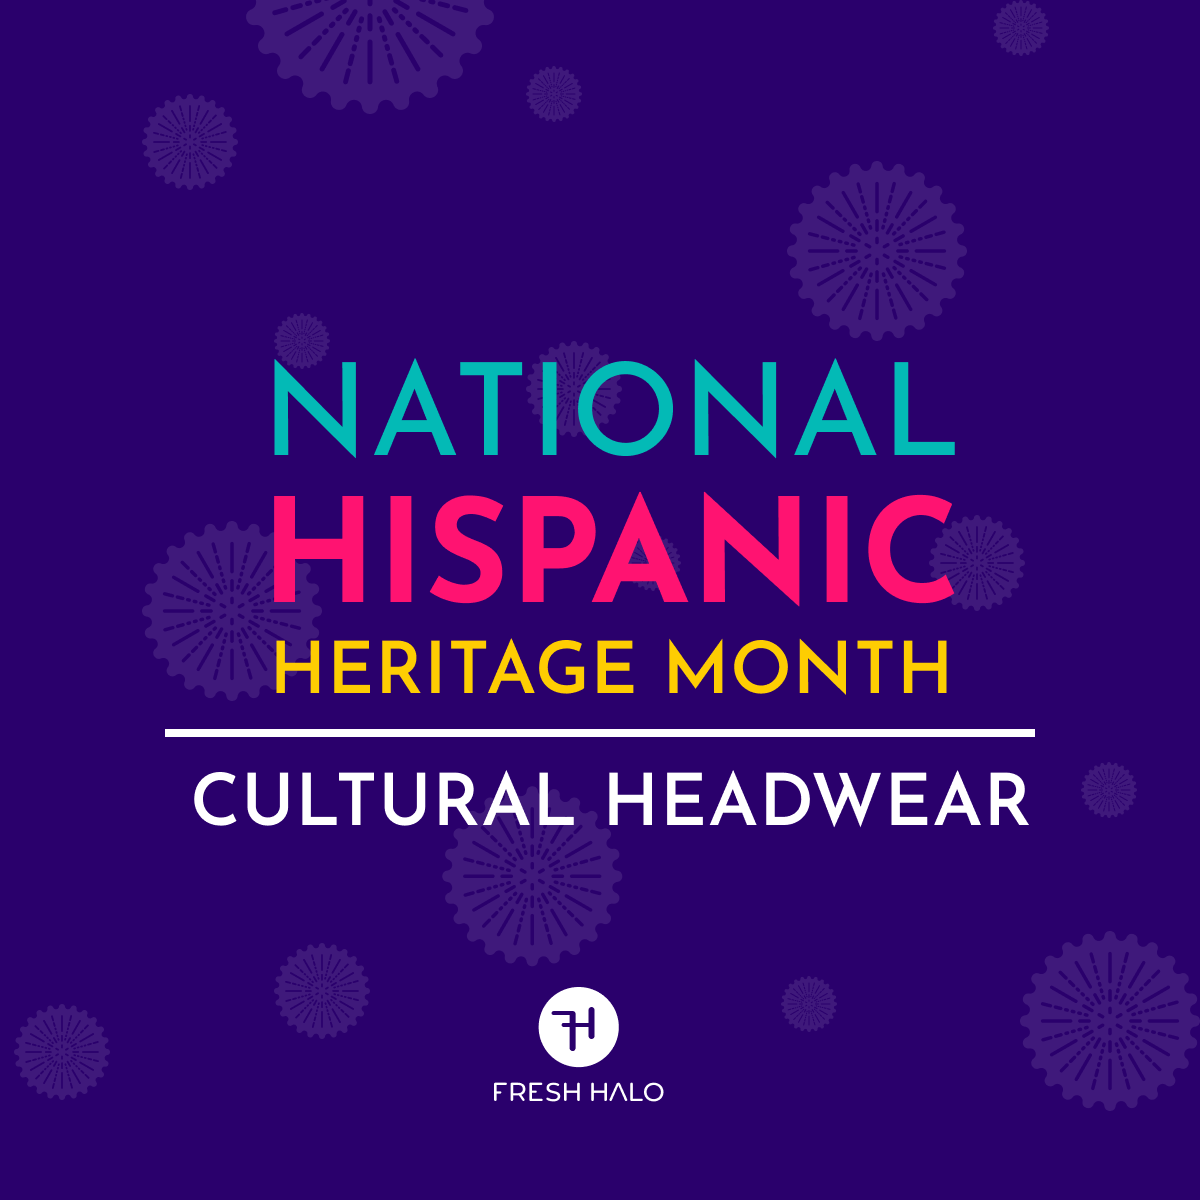 Celebrate Hats of Hispanic Heritage Hats! 🎉